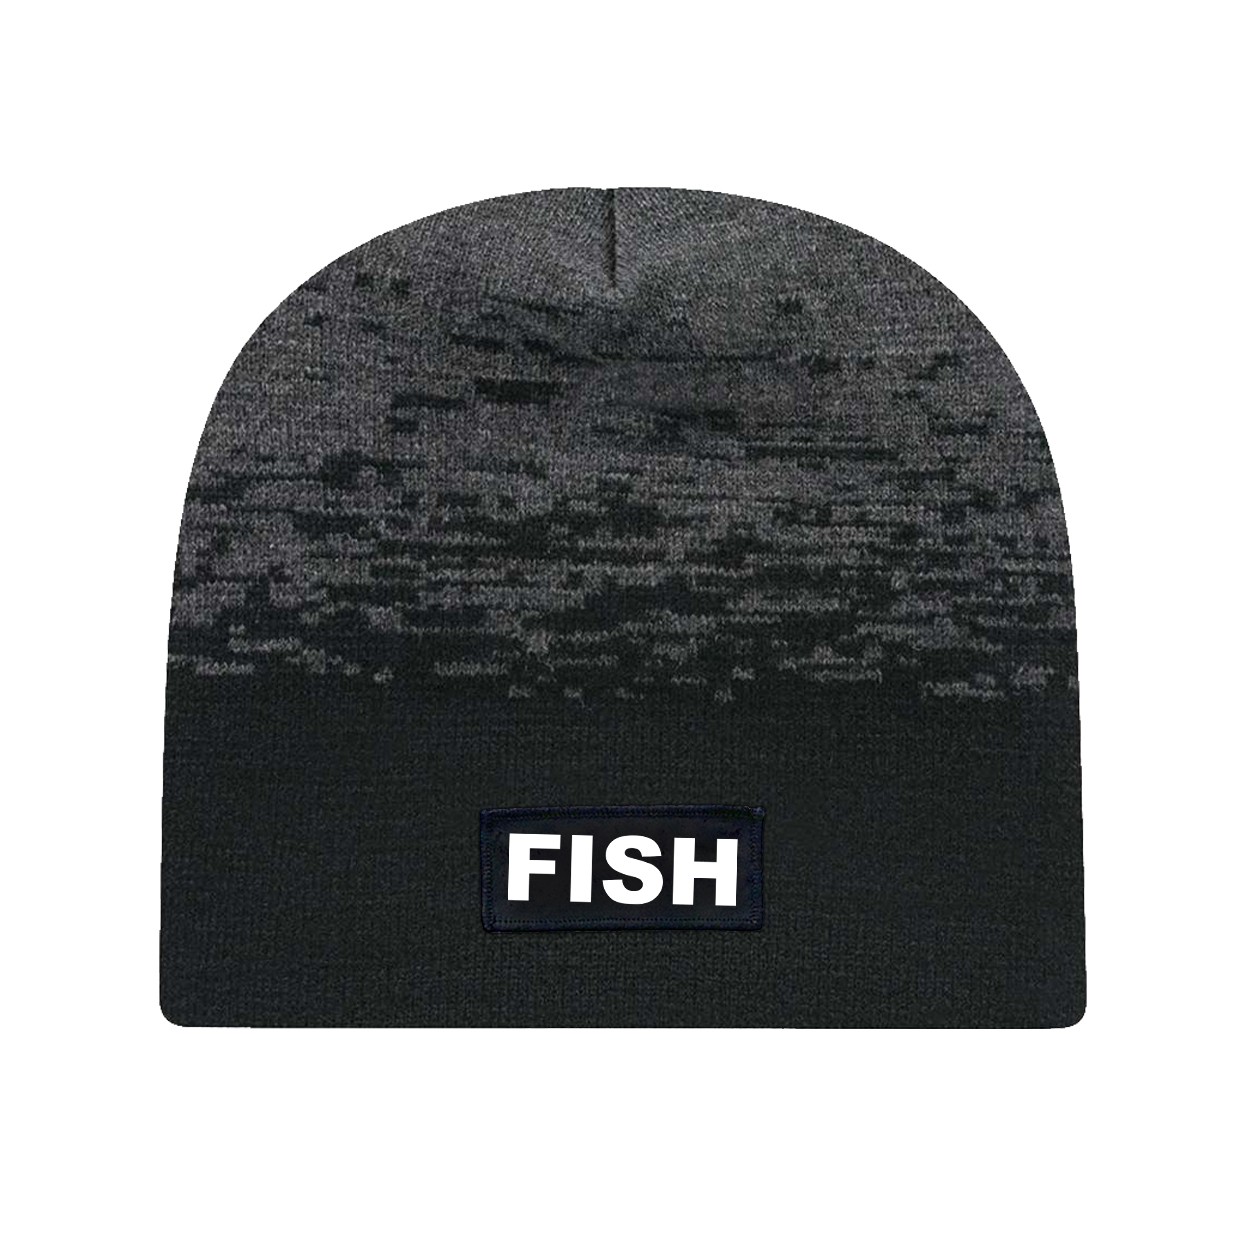 Fish Brand Logo Night Out Woven Patch Marled Knit Skully Beanie Black/ Dark Heather Grey (White Logo)